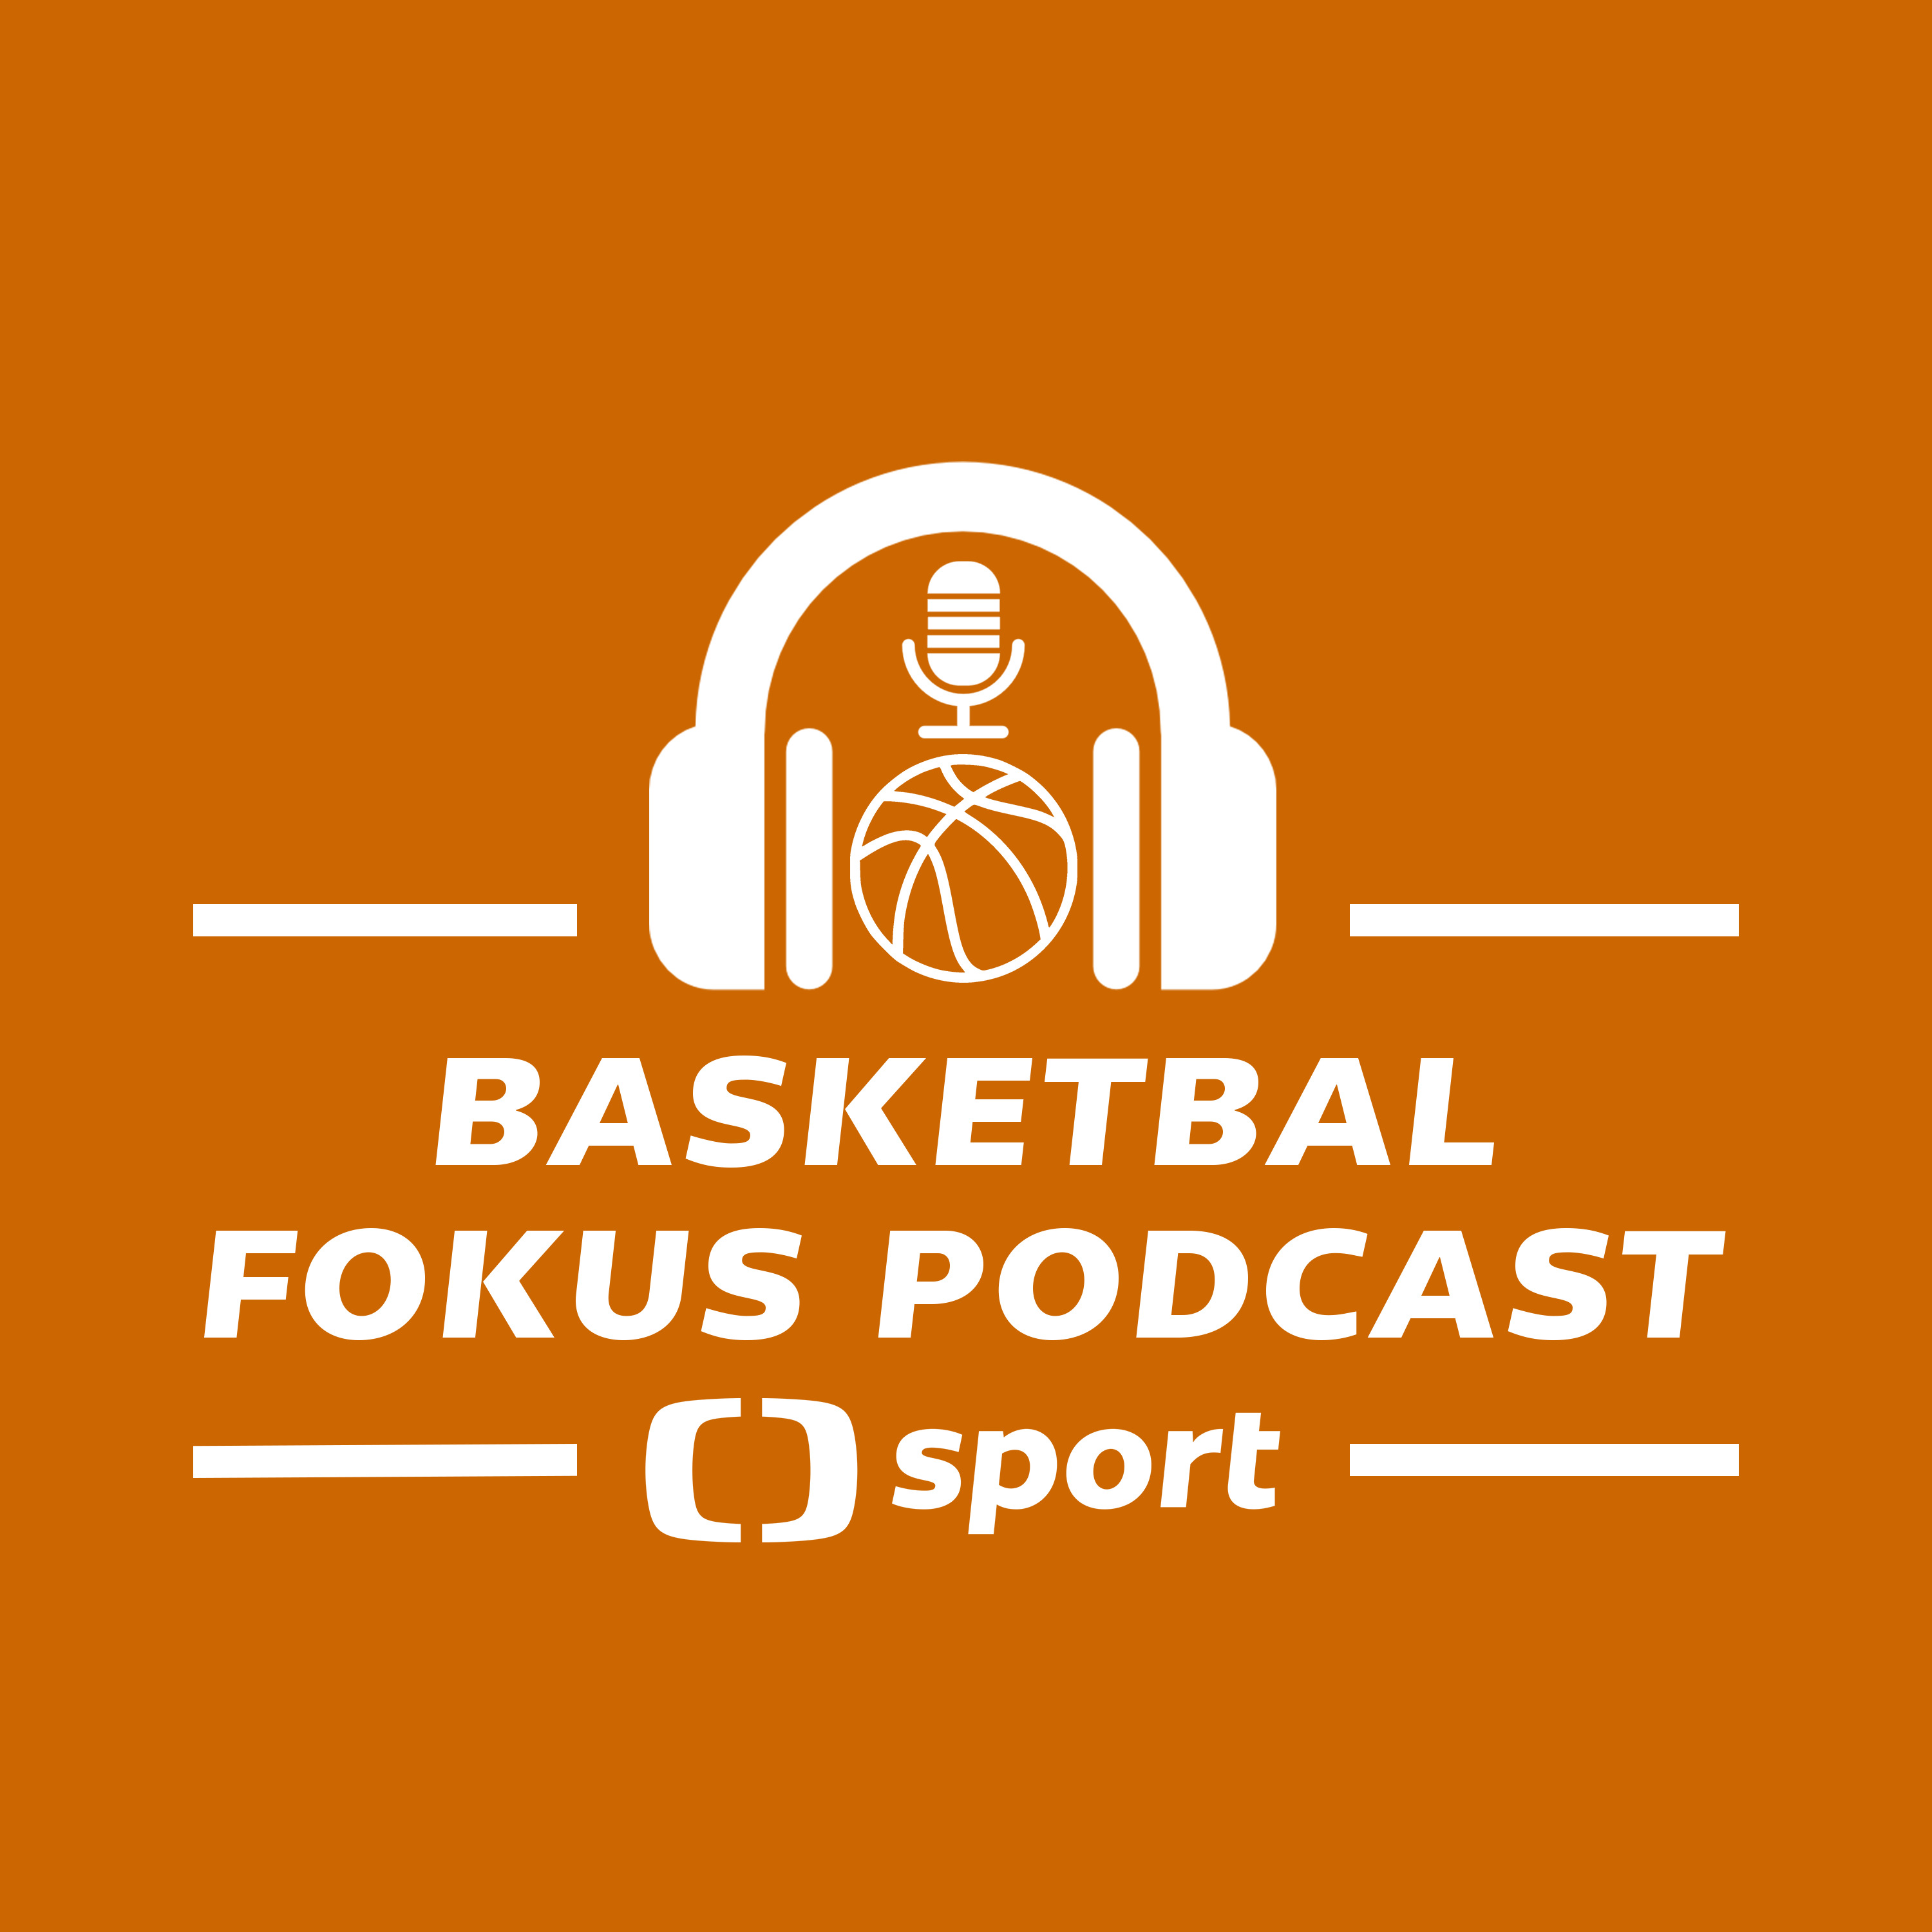 Basketbal fokus podcast: Eurobasket 2022 preview